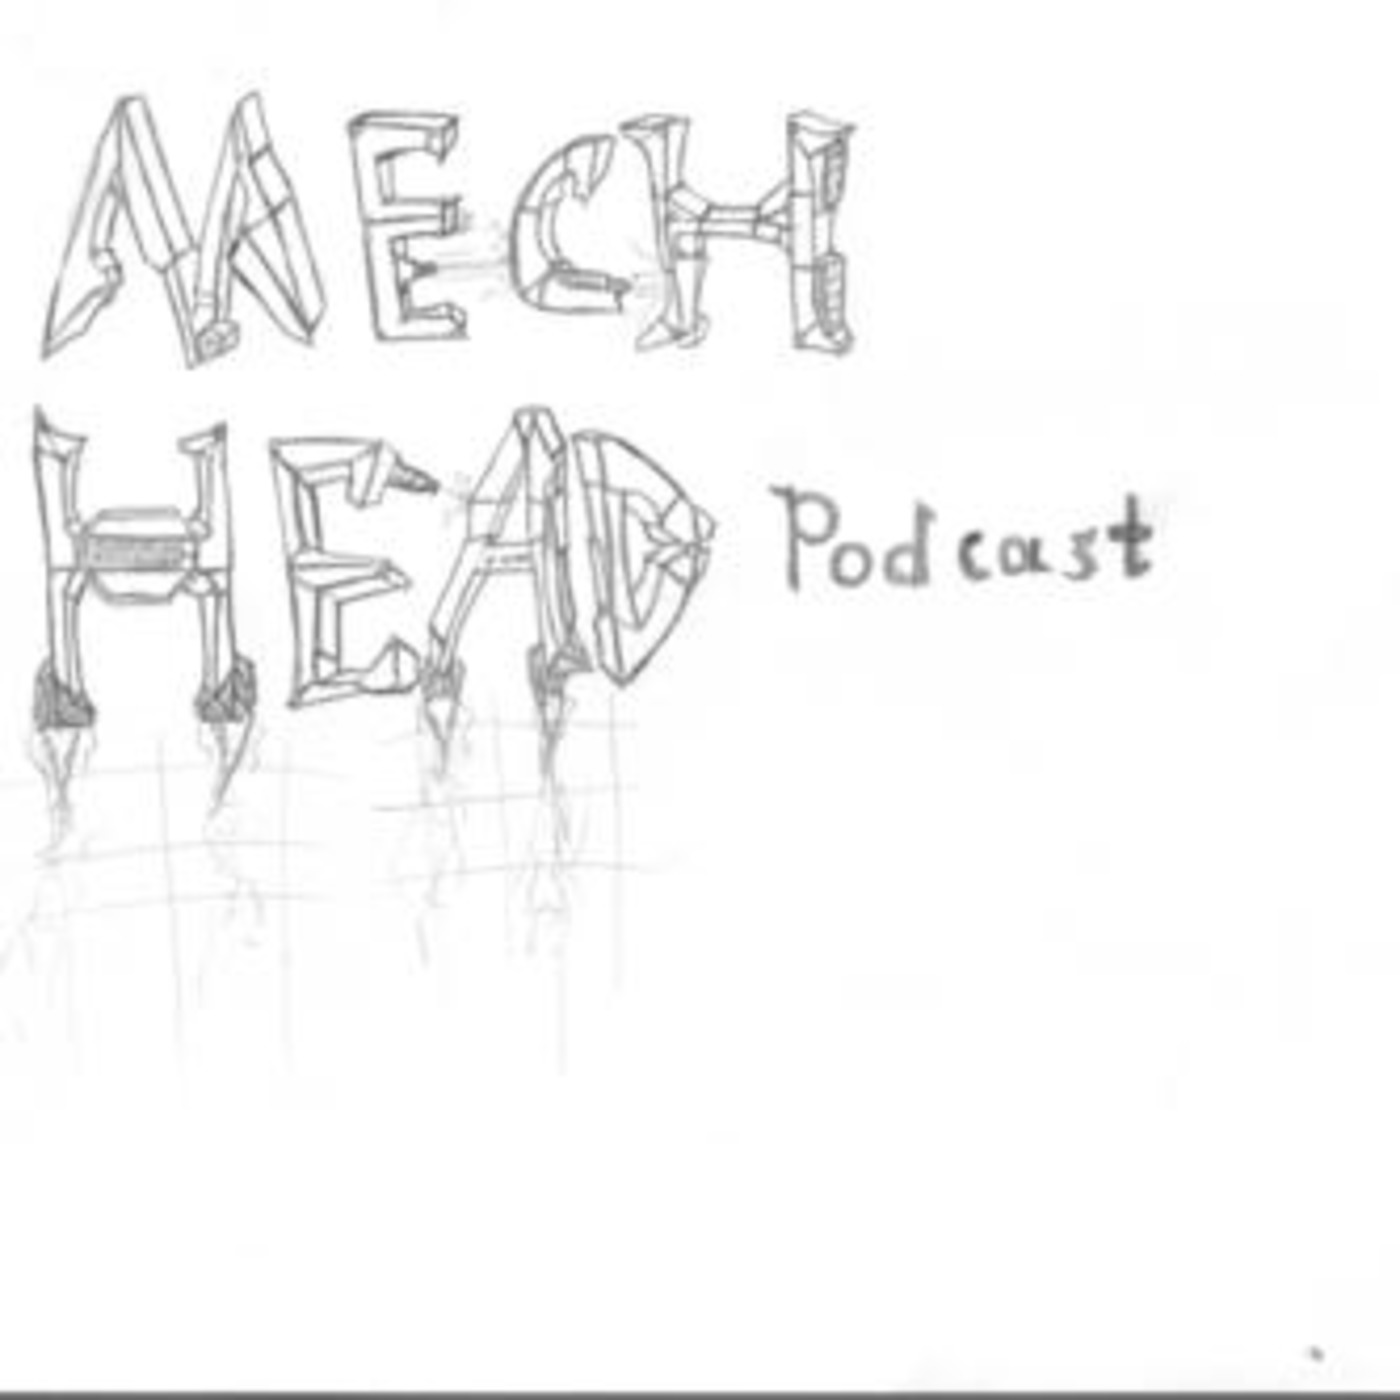 MechHead Podcast #29!